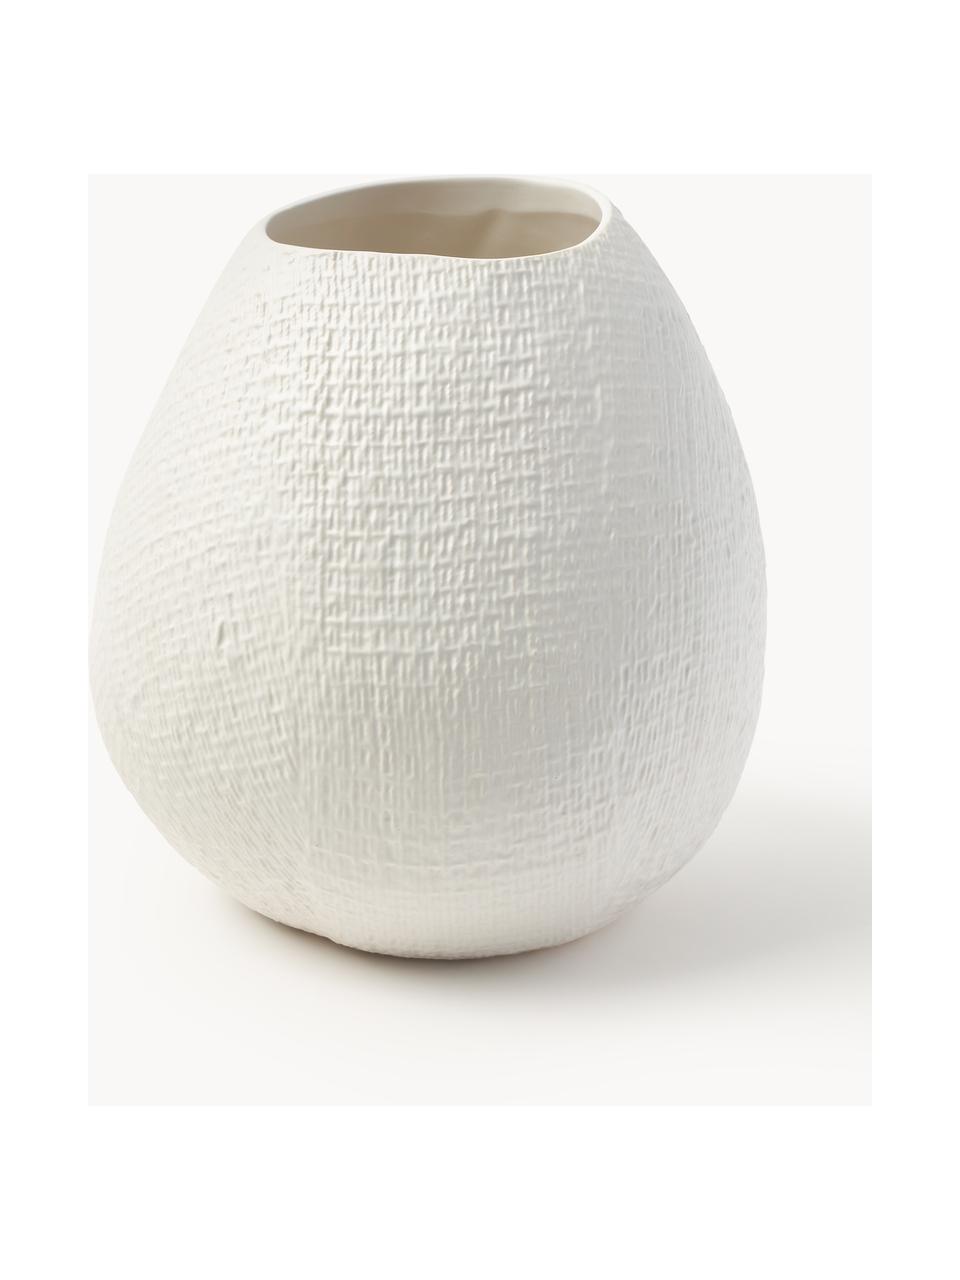 Vaso grande in ceramica fatto a mano Wendy, alt. 24 cm, Ceramica, Bianco crema, Ø 23 x Alt. 24 cm